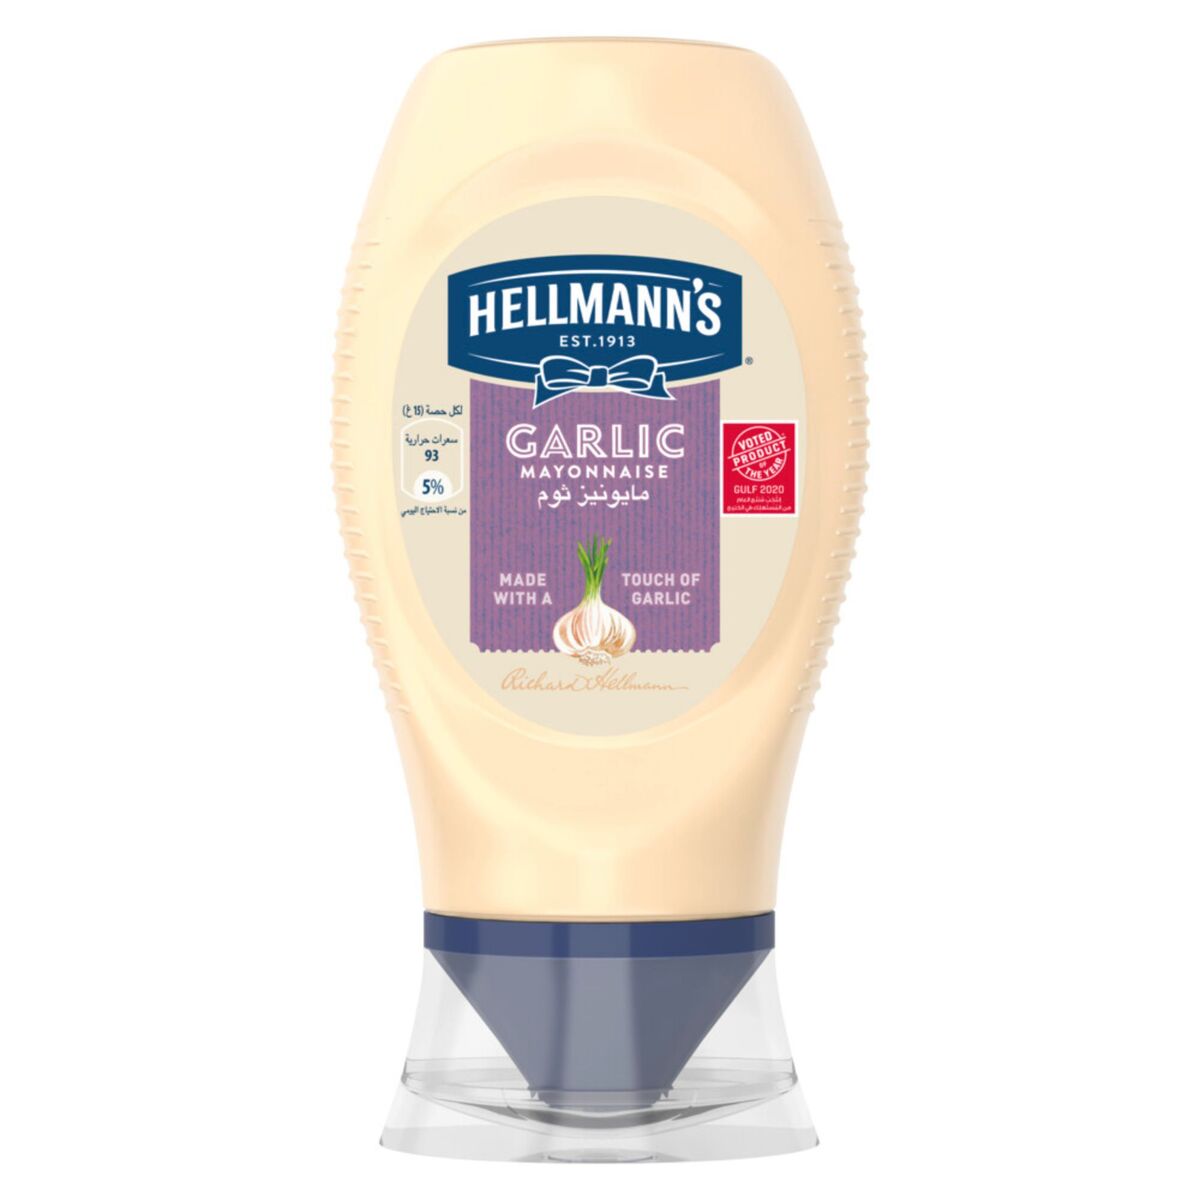 Hellmann's Garlic Mayonnaise 235 g